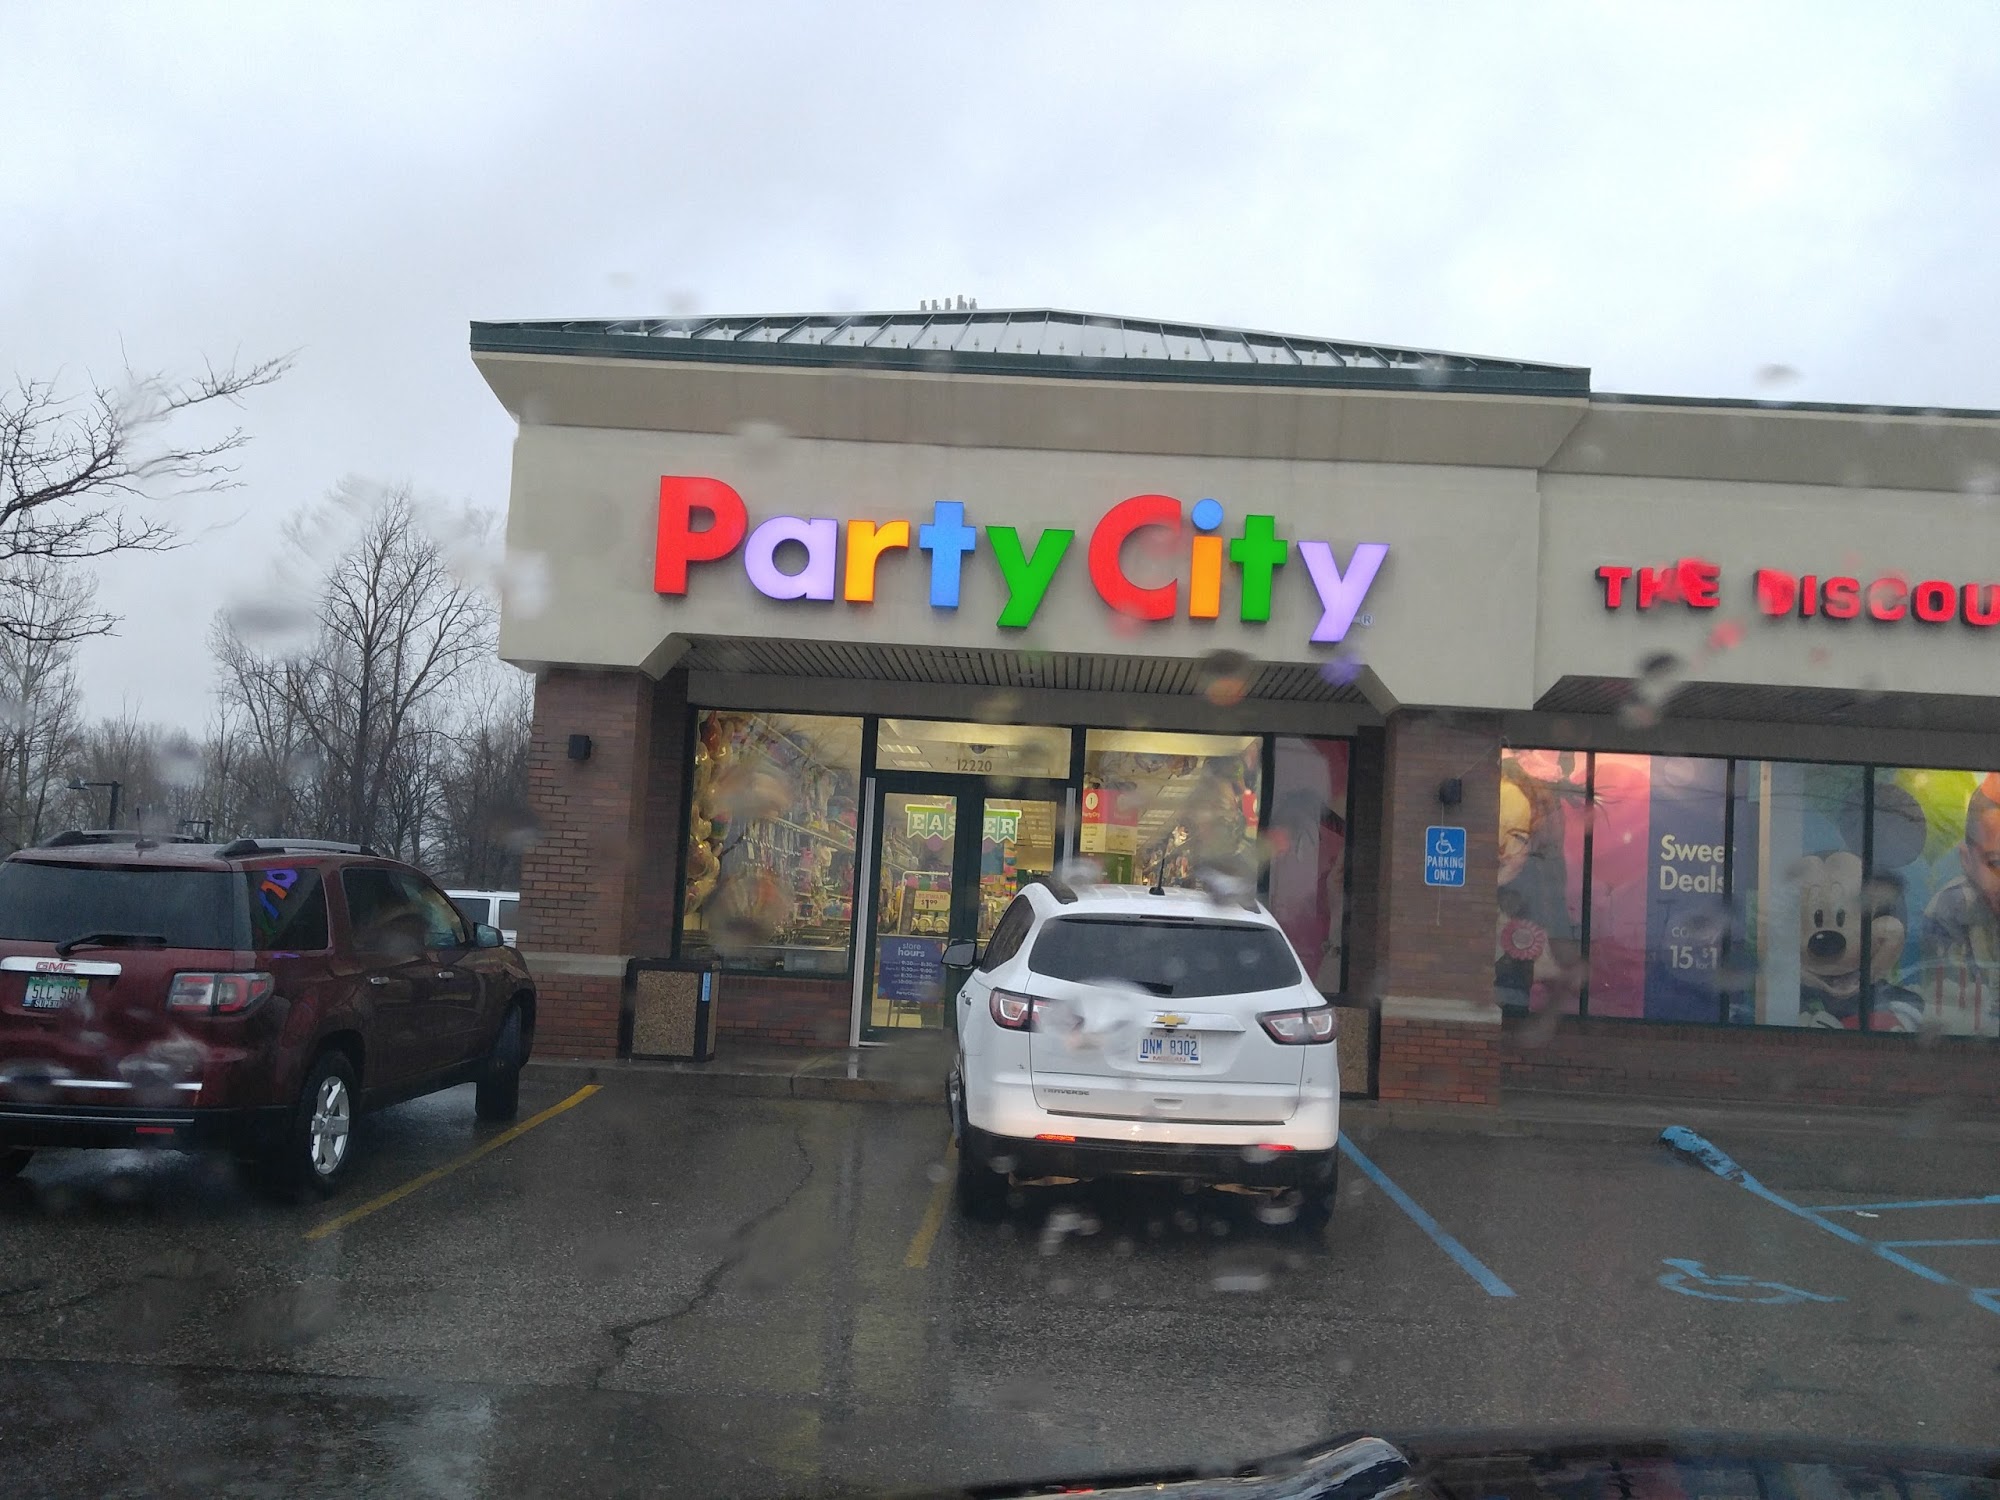 Party City